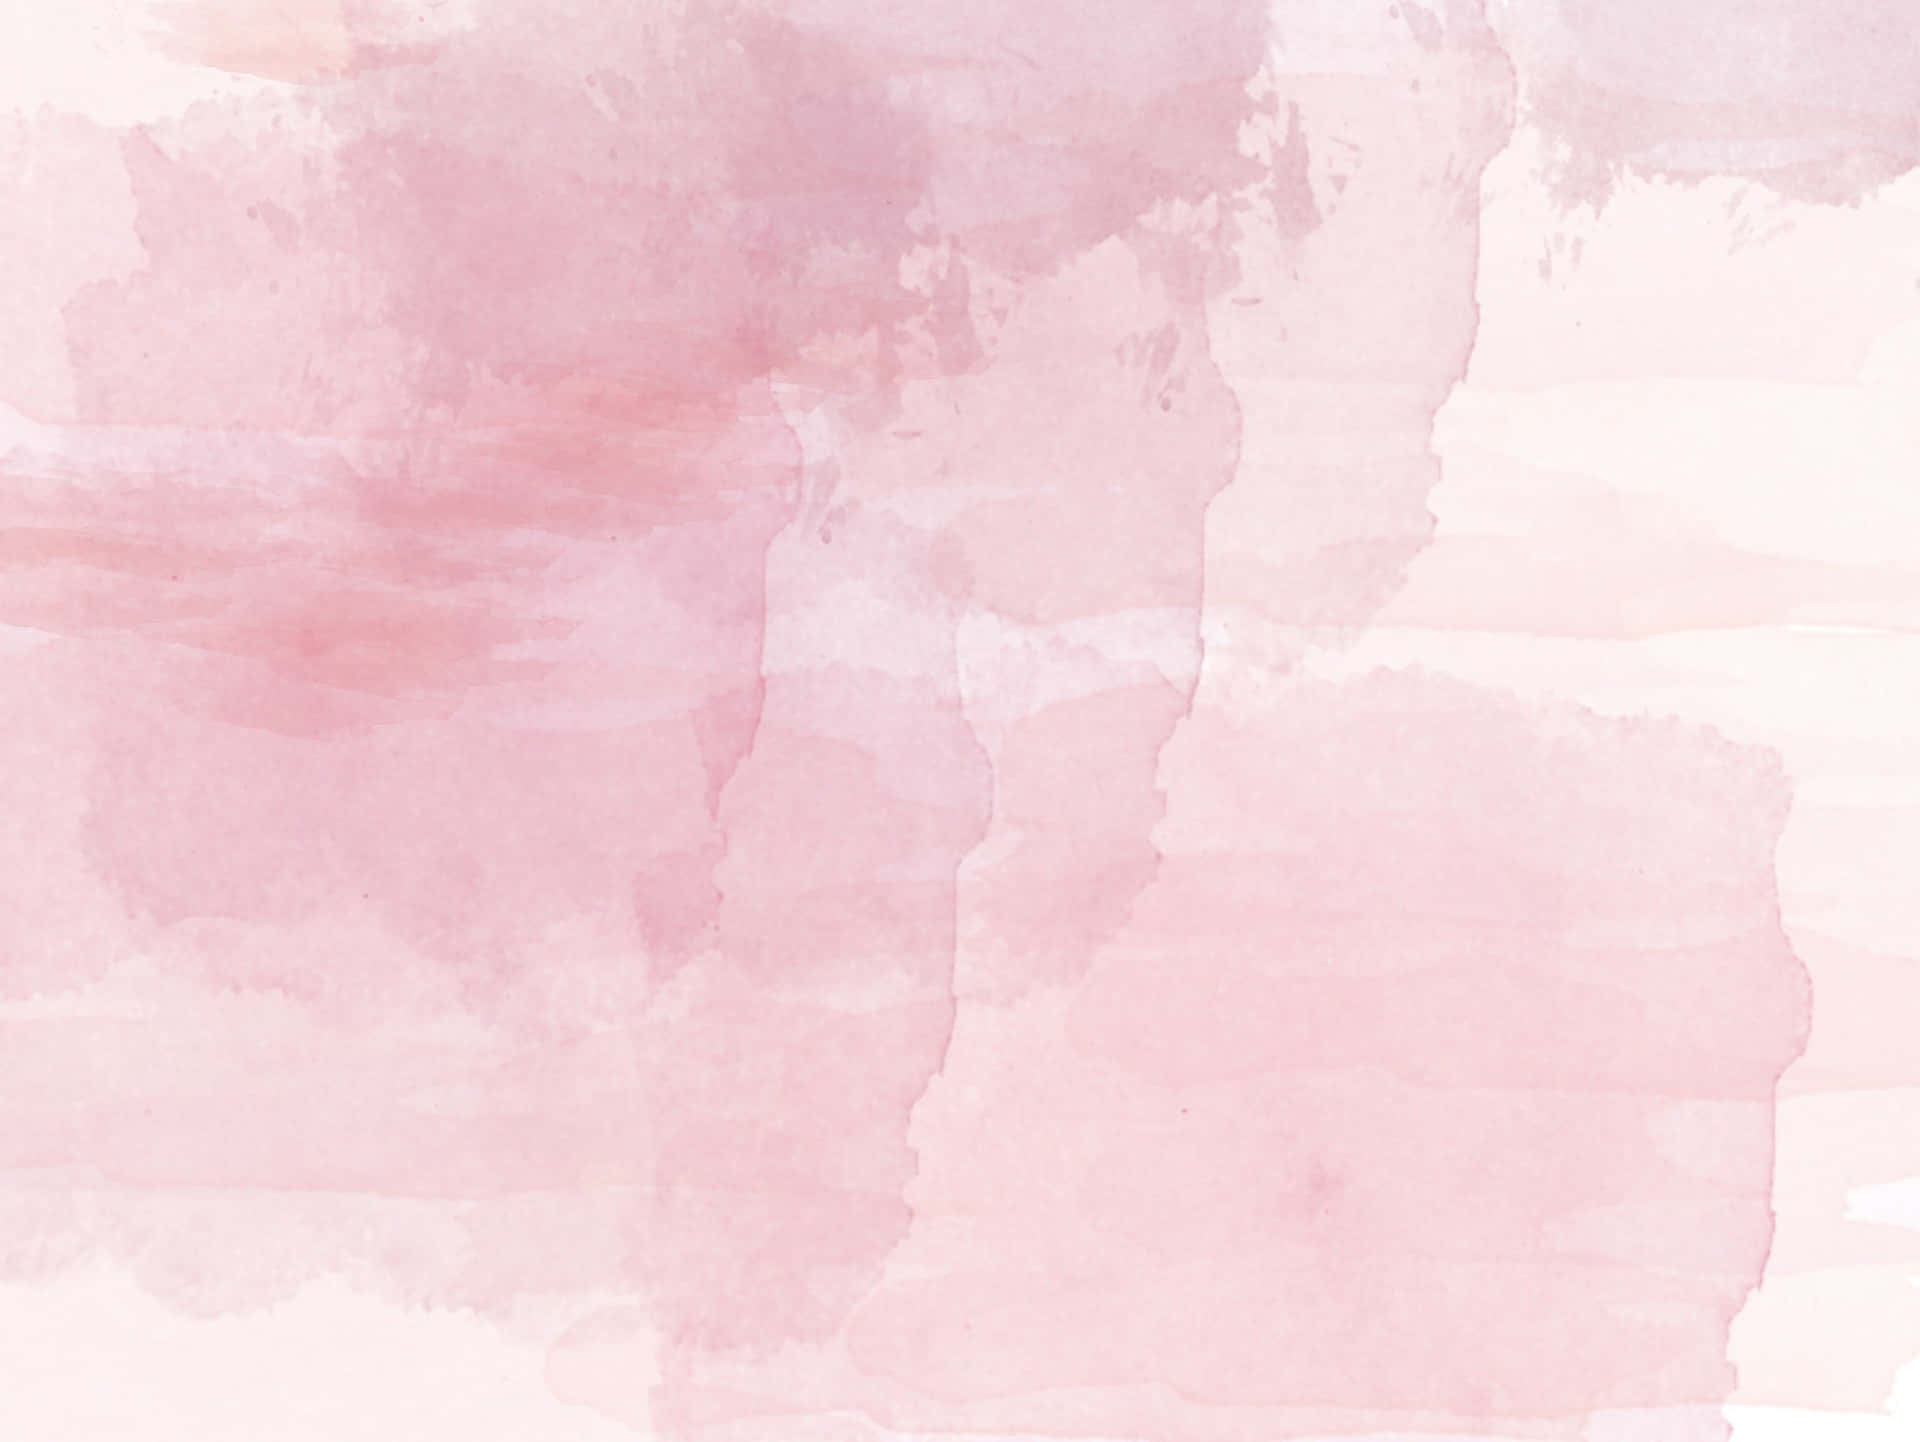 A beautiful abstract pink watercolor illustration Wallpaper